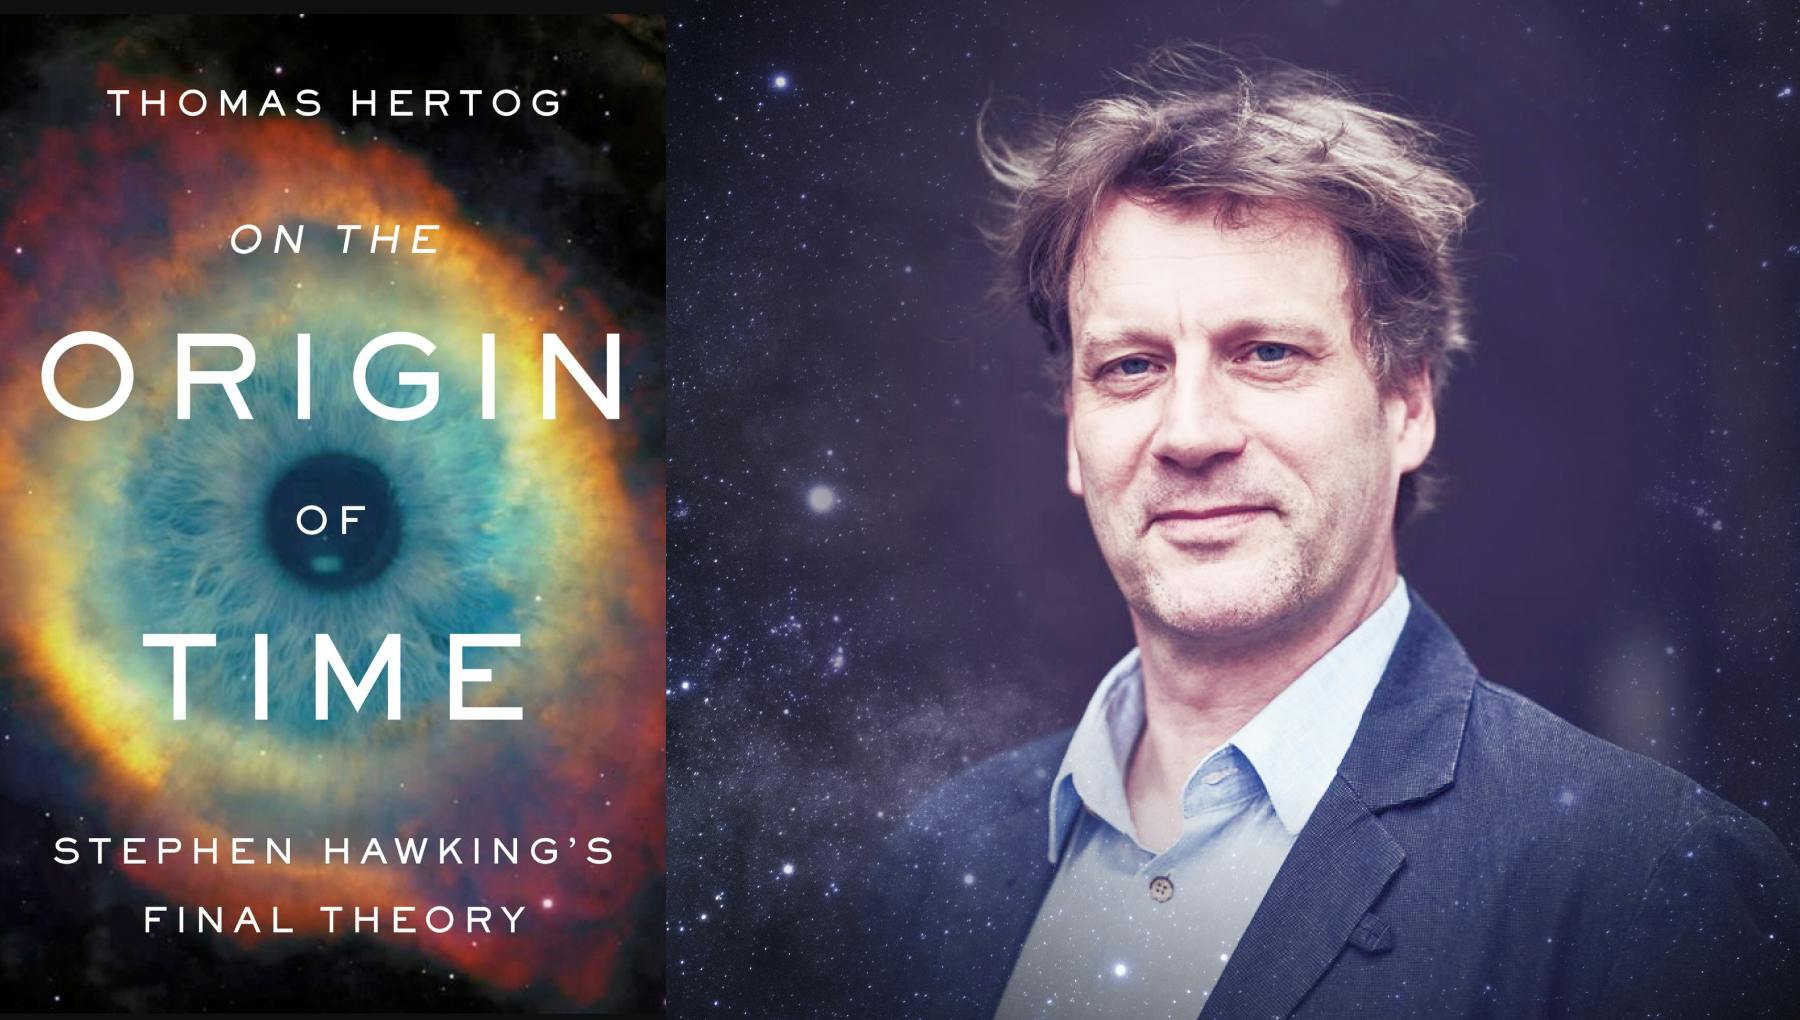 Lezing Thomas Hertog: The Origin of Time